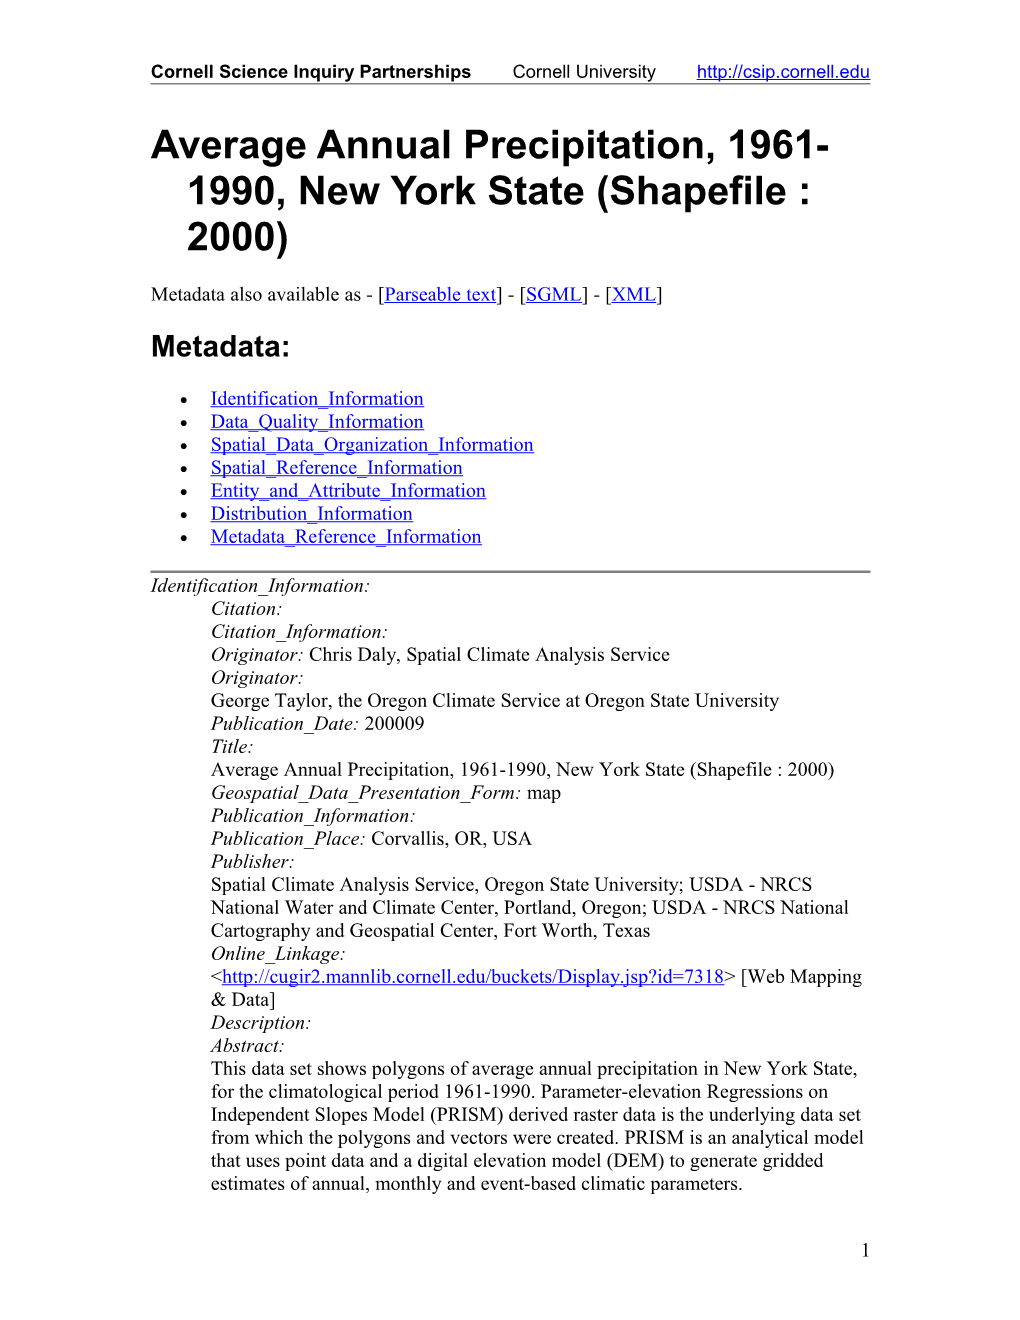 Average Annual Precipitation, 1961-1990, New York State (Shapefile : 2000)